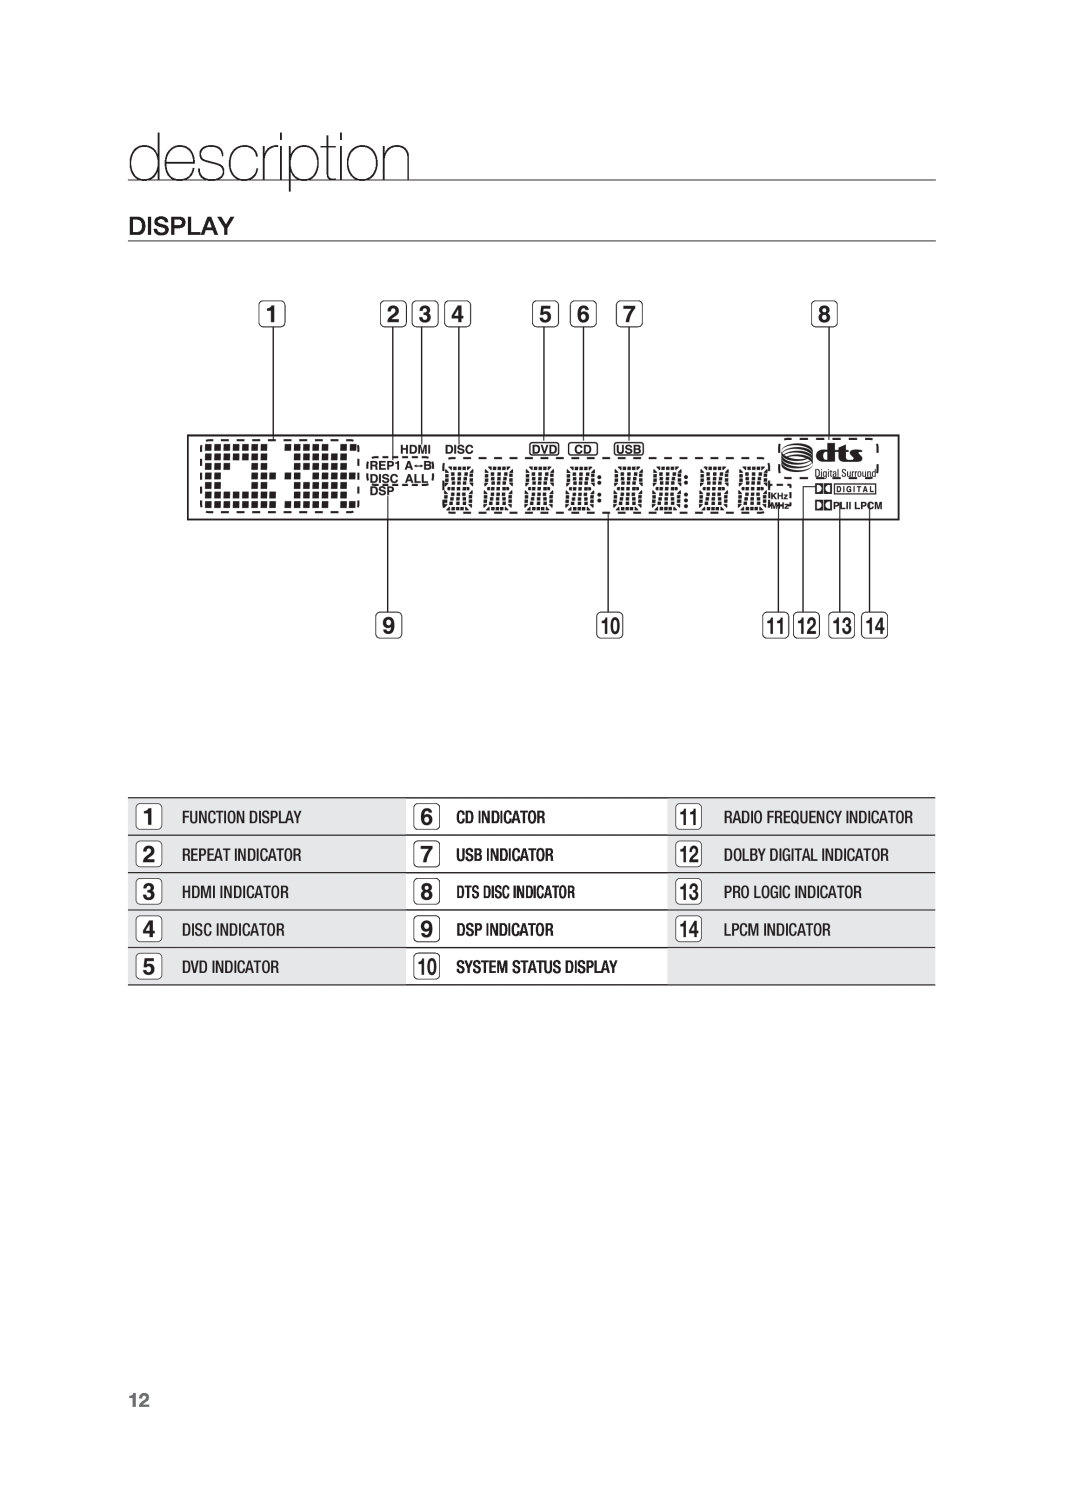 Samsung AH68-02055S manual Display, description 